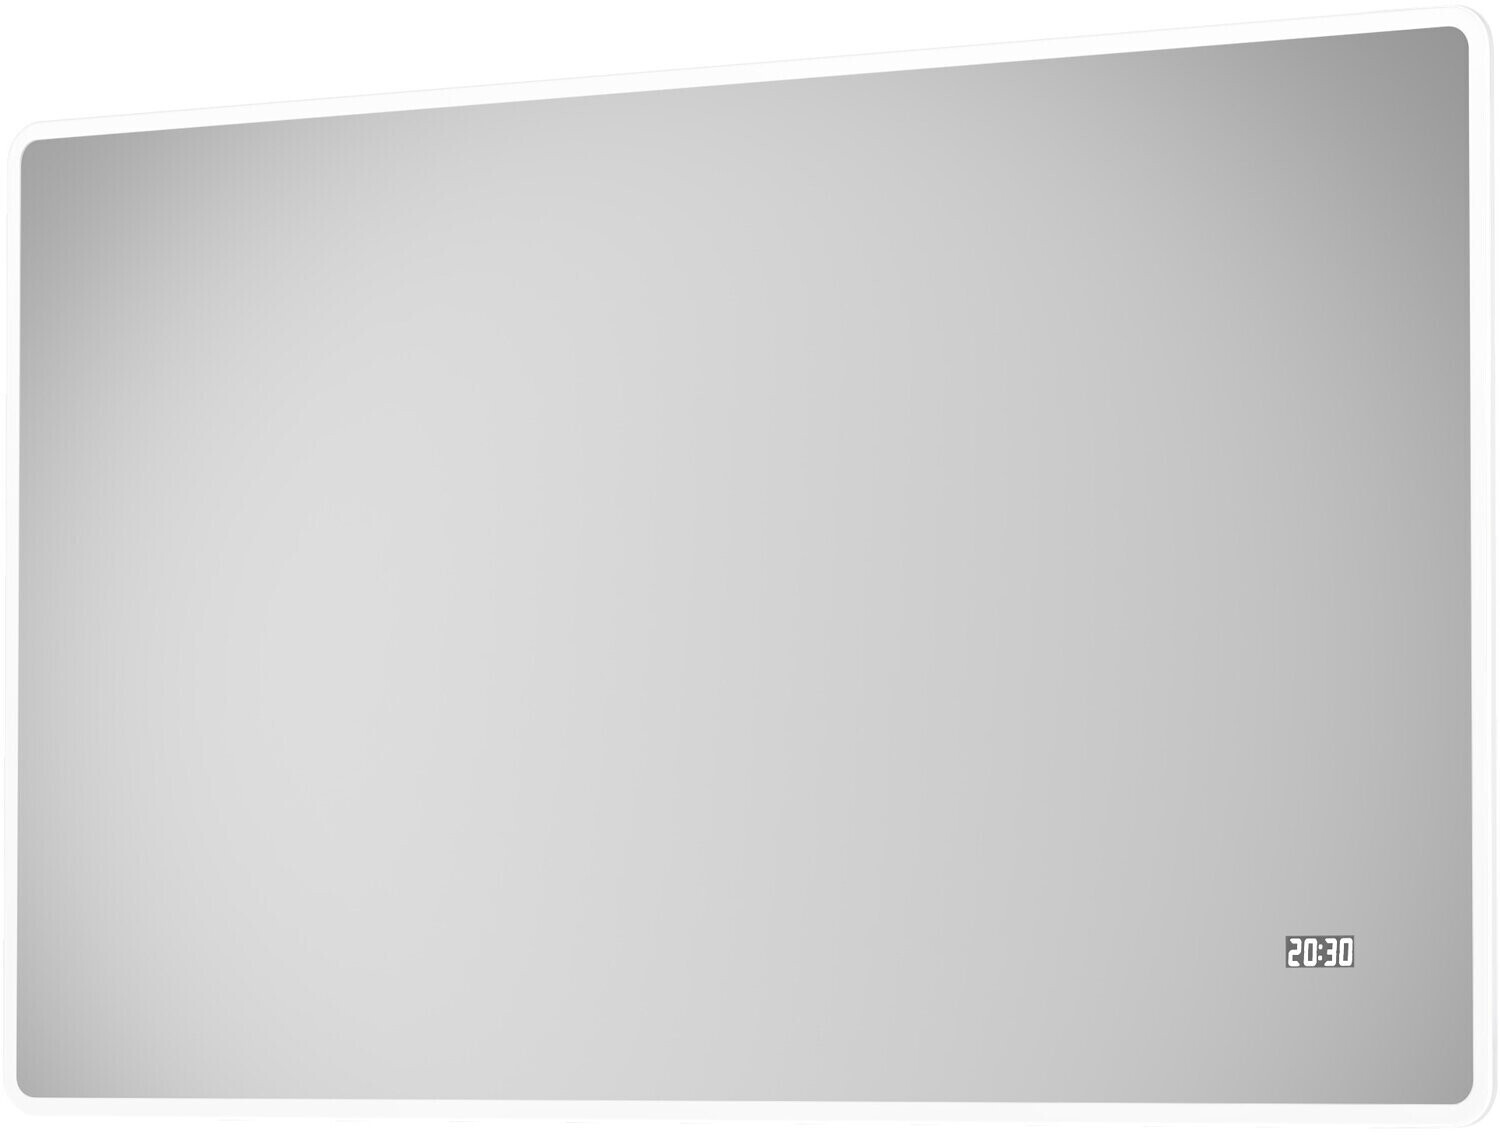 DSK Sun 120x70cm ab 289,00 € | Preisvergleich bei